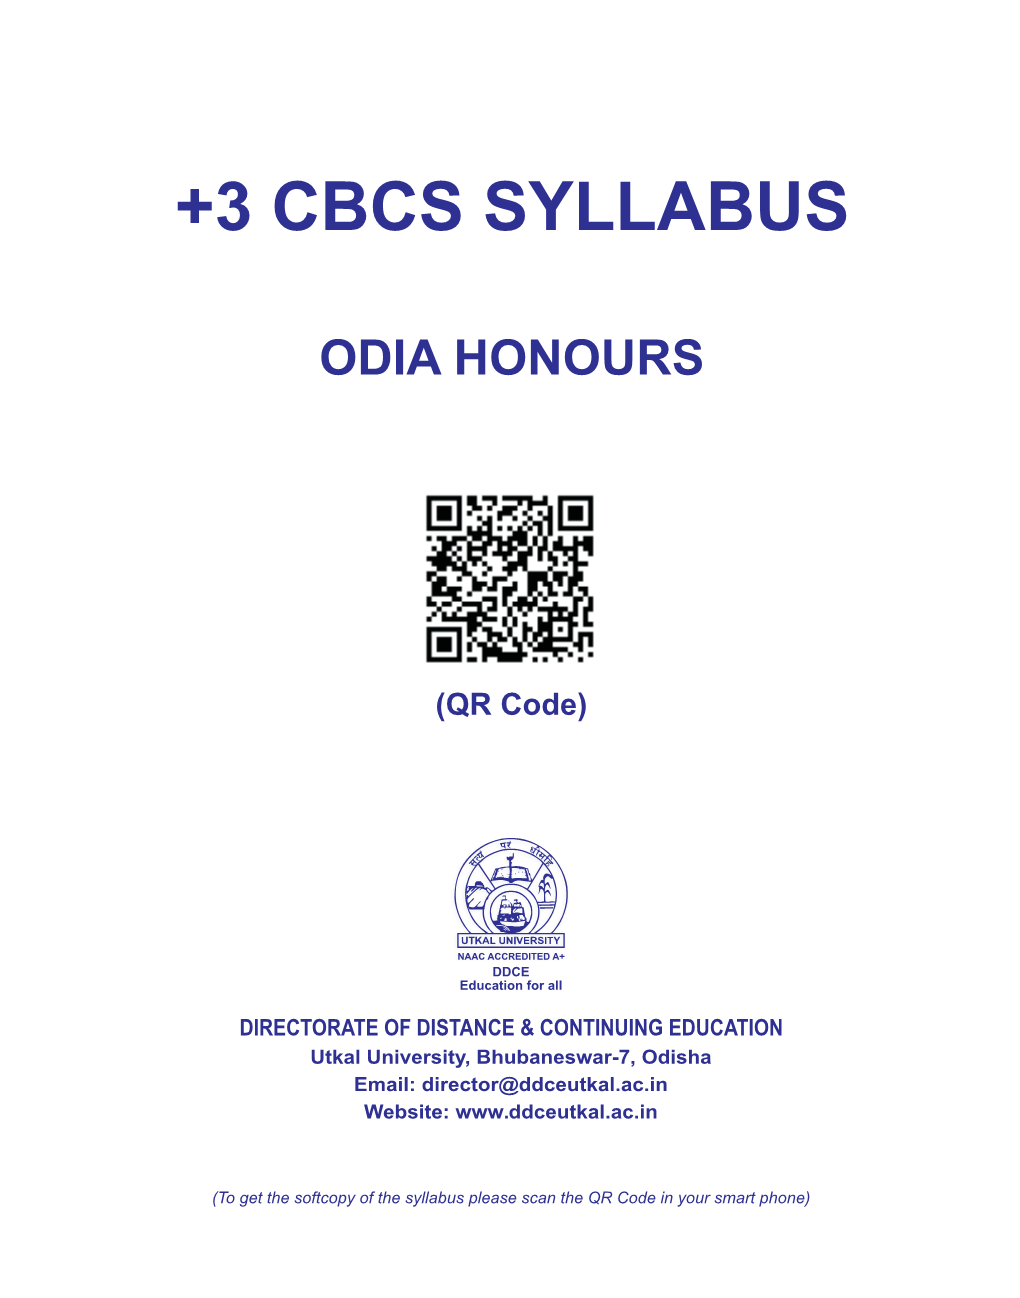 +3 Cbcs Syllabus